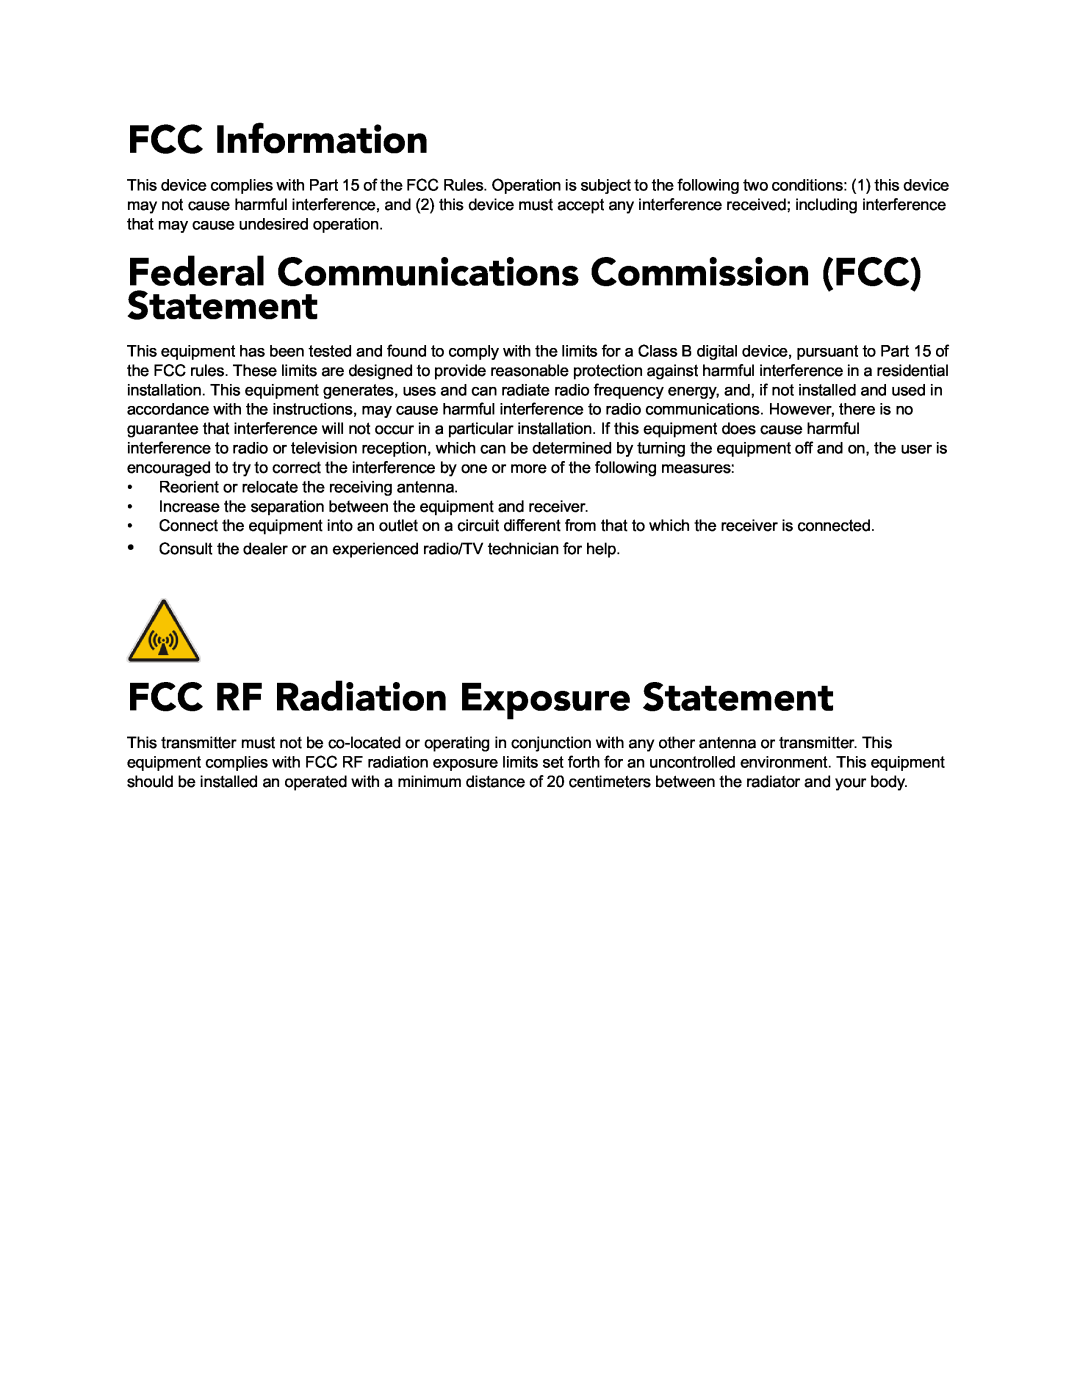 AMX NXT-1200V manual FCC Information, Federal Communications Commission FCC Statement, FCC RF Radiation Exposure Statement 